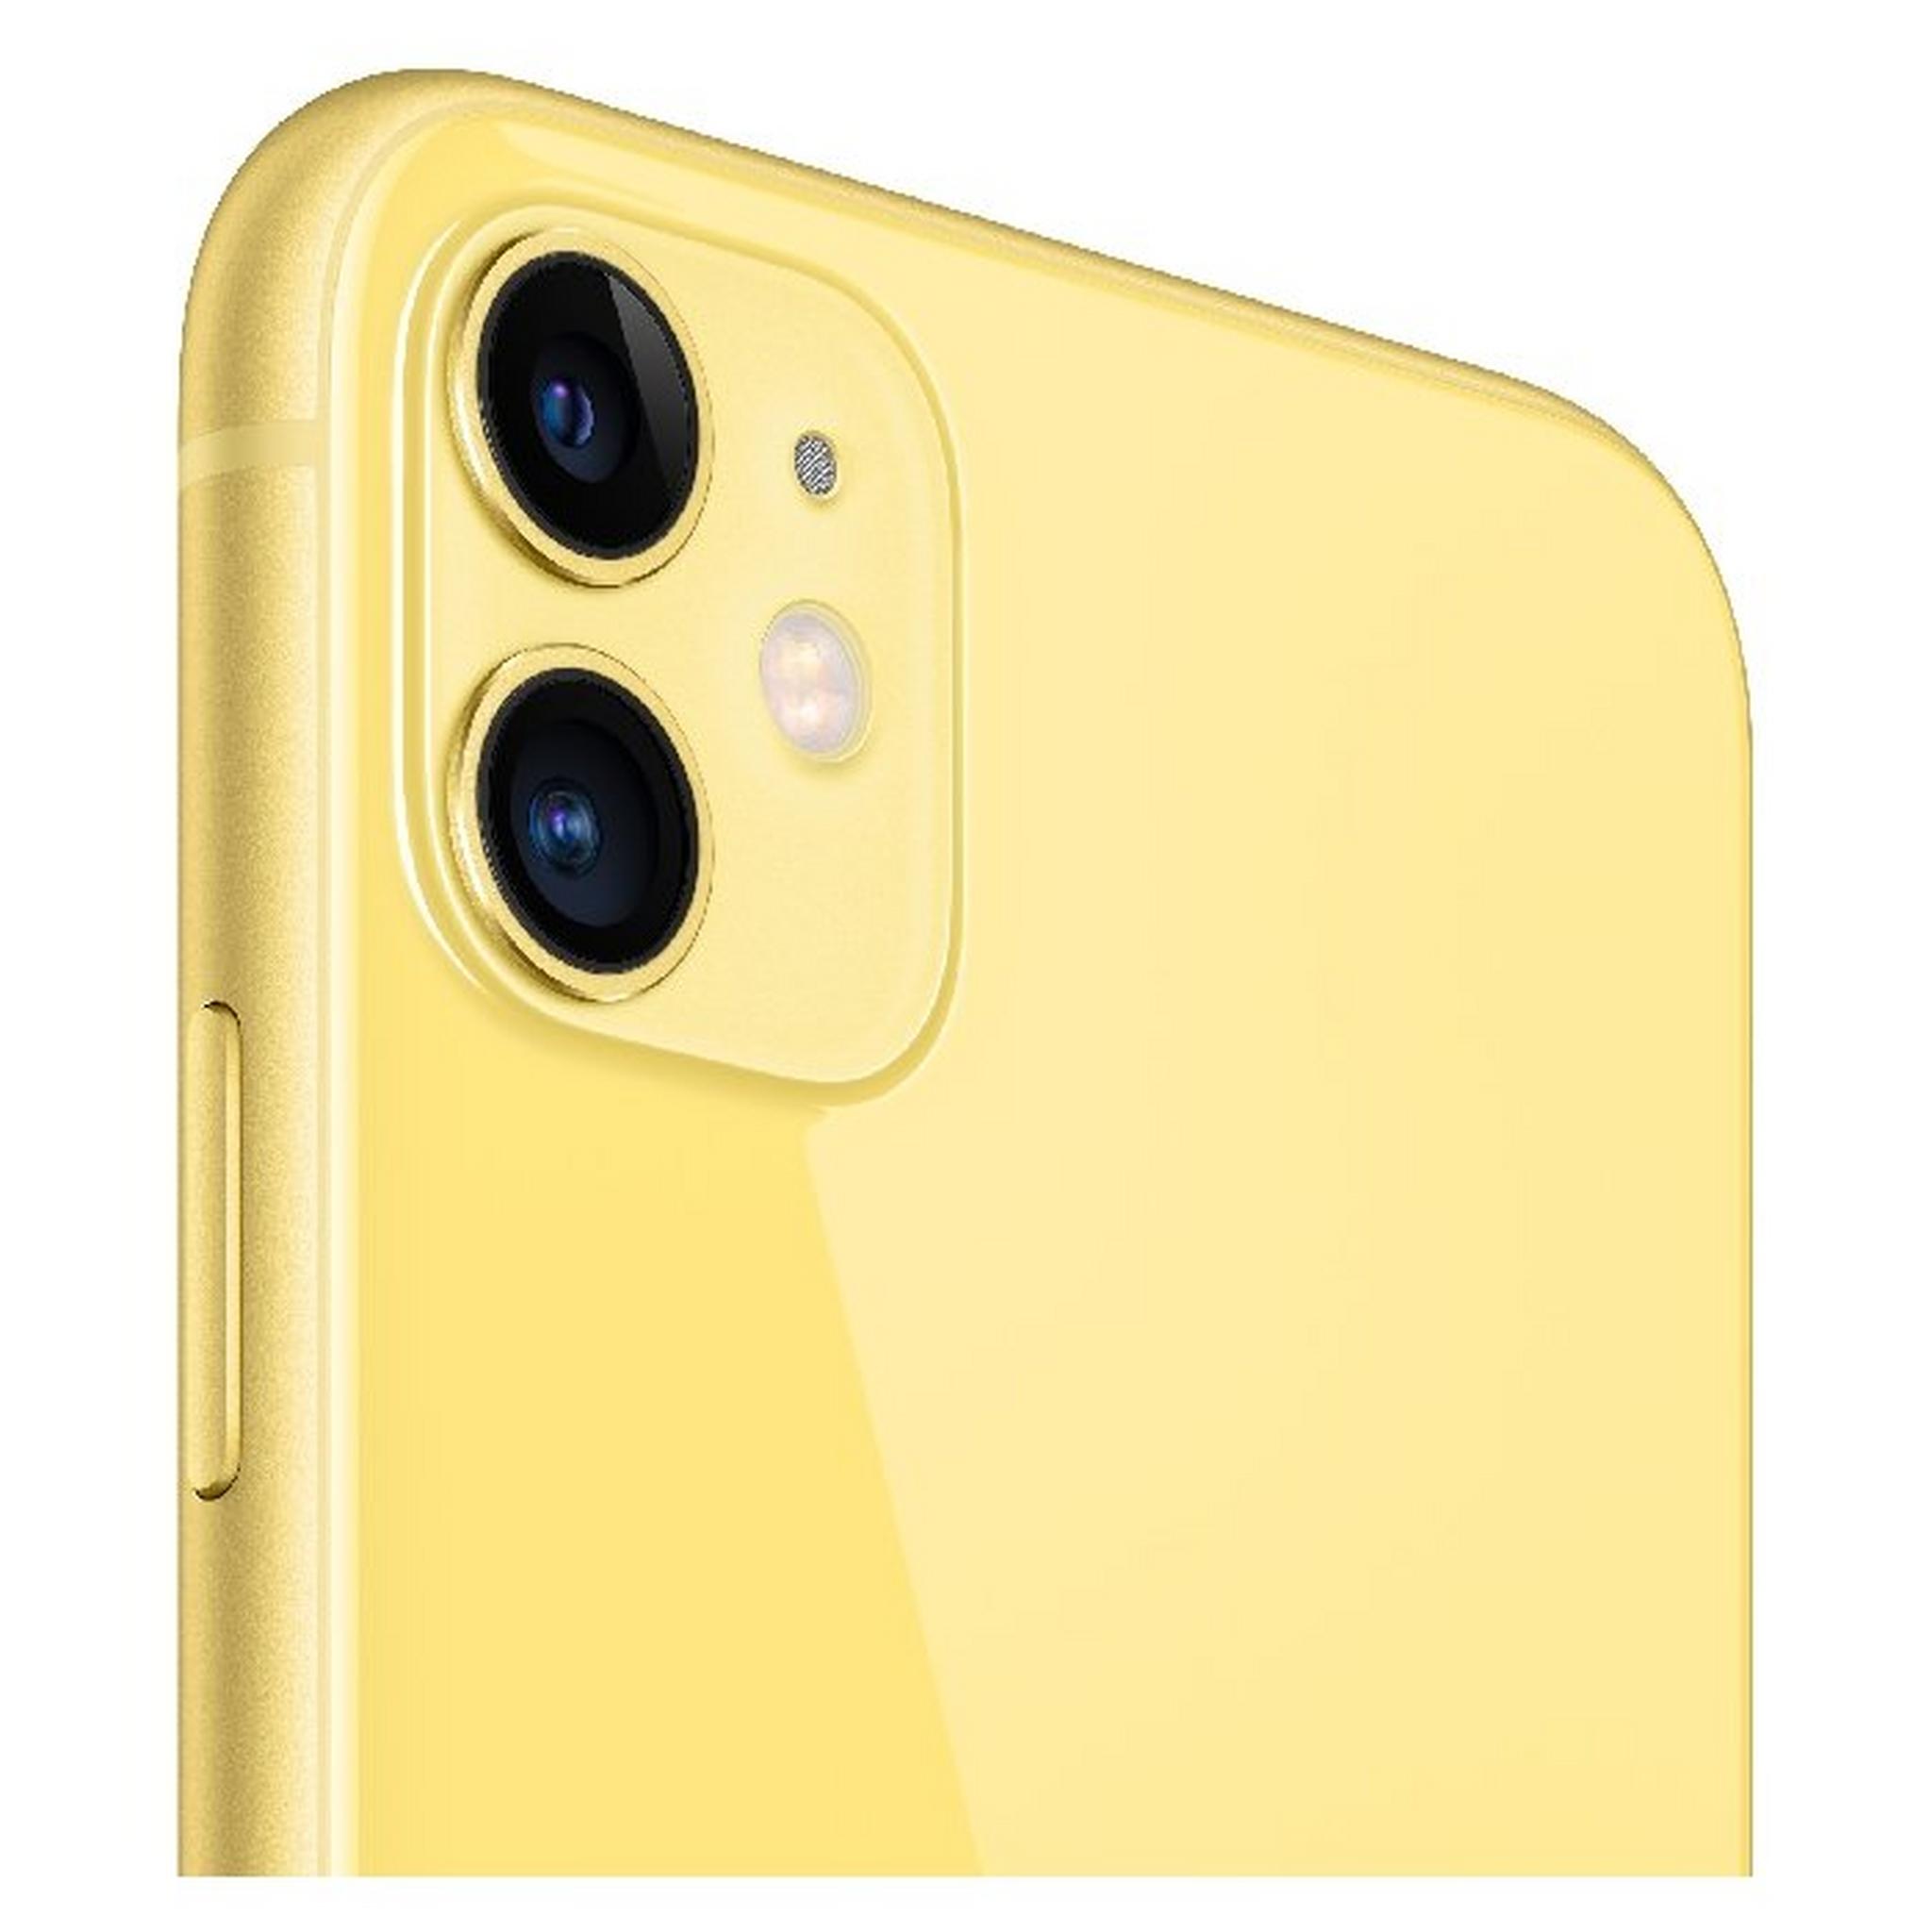 Apple iPhone 11 128GB Phone - Yellow